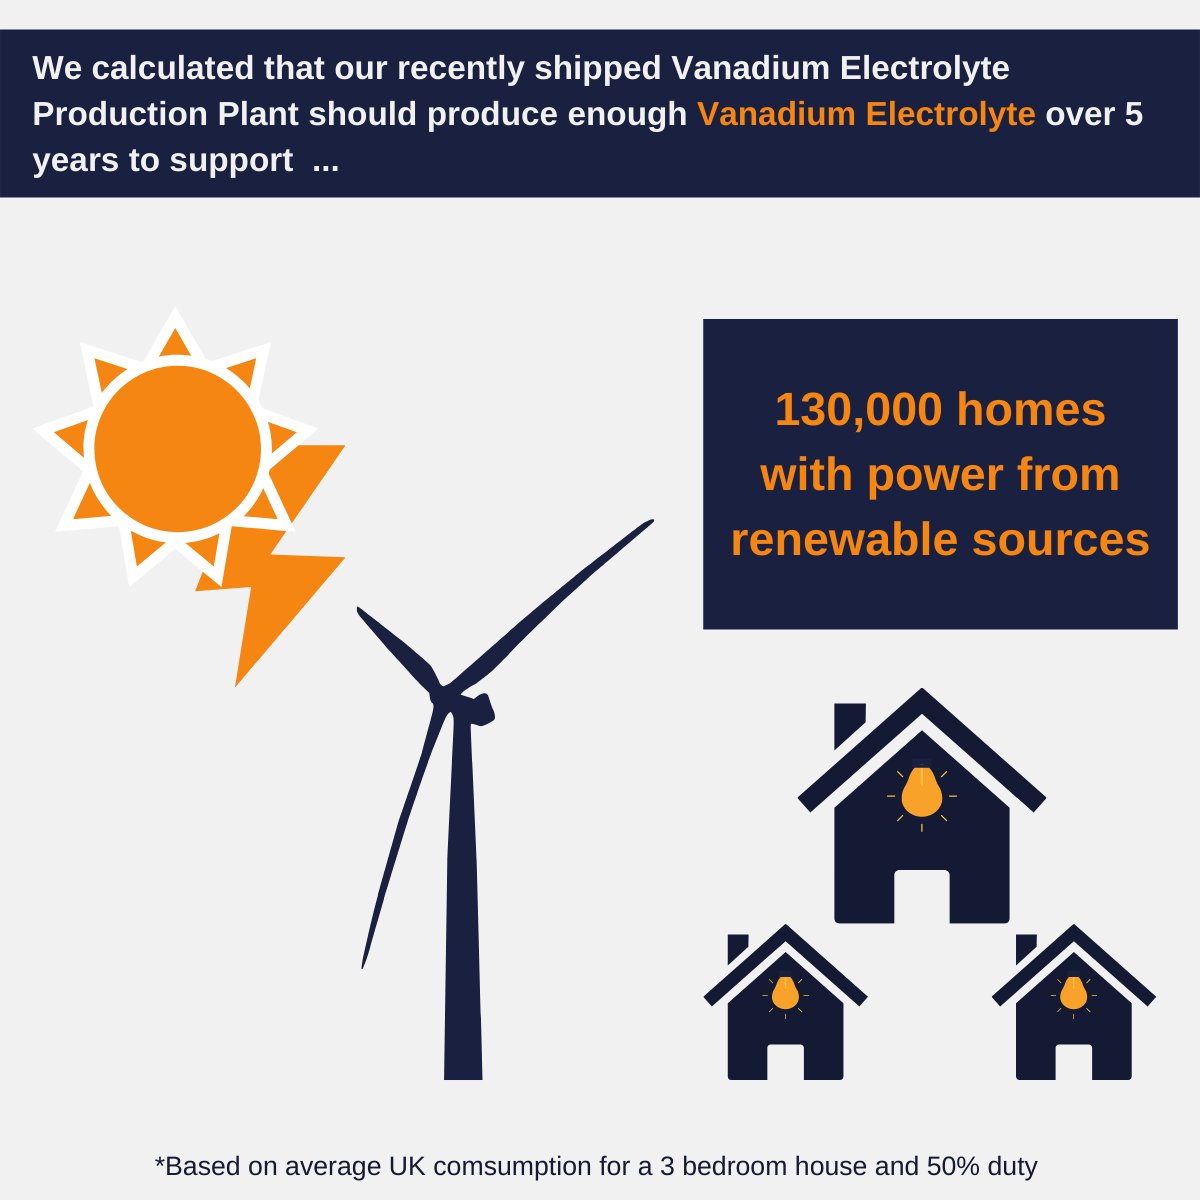 The power of vanadium electrolyte! #vrfb #vanadium #vanadiumelectrolyte #redoxflowbattery #renewableenergy #renewablepower #batterystorage #batterymanufacturing #circulareconomy #renewablesources